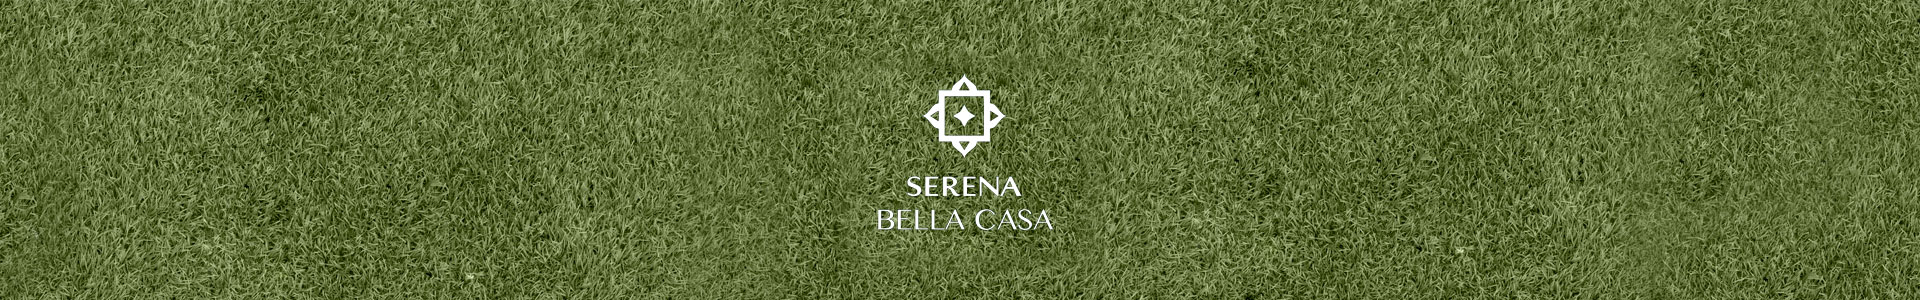 Serena Bella Casa Features